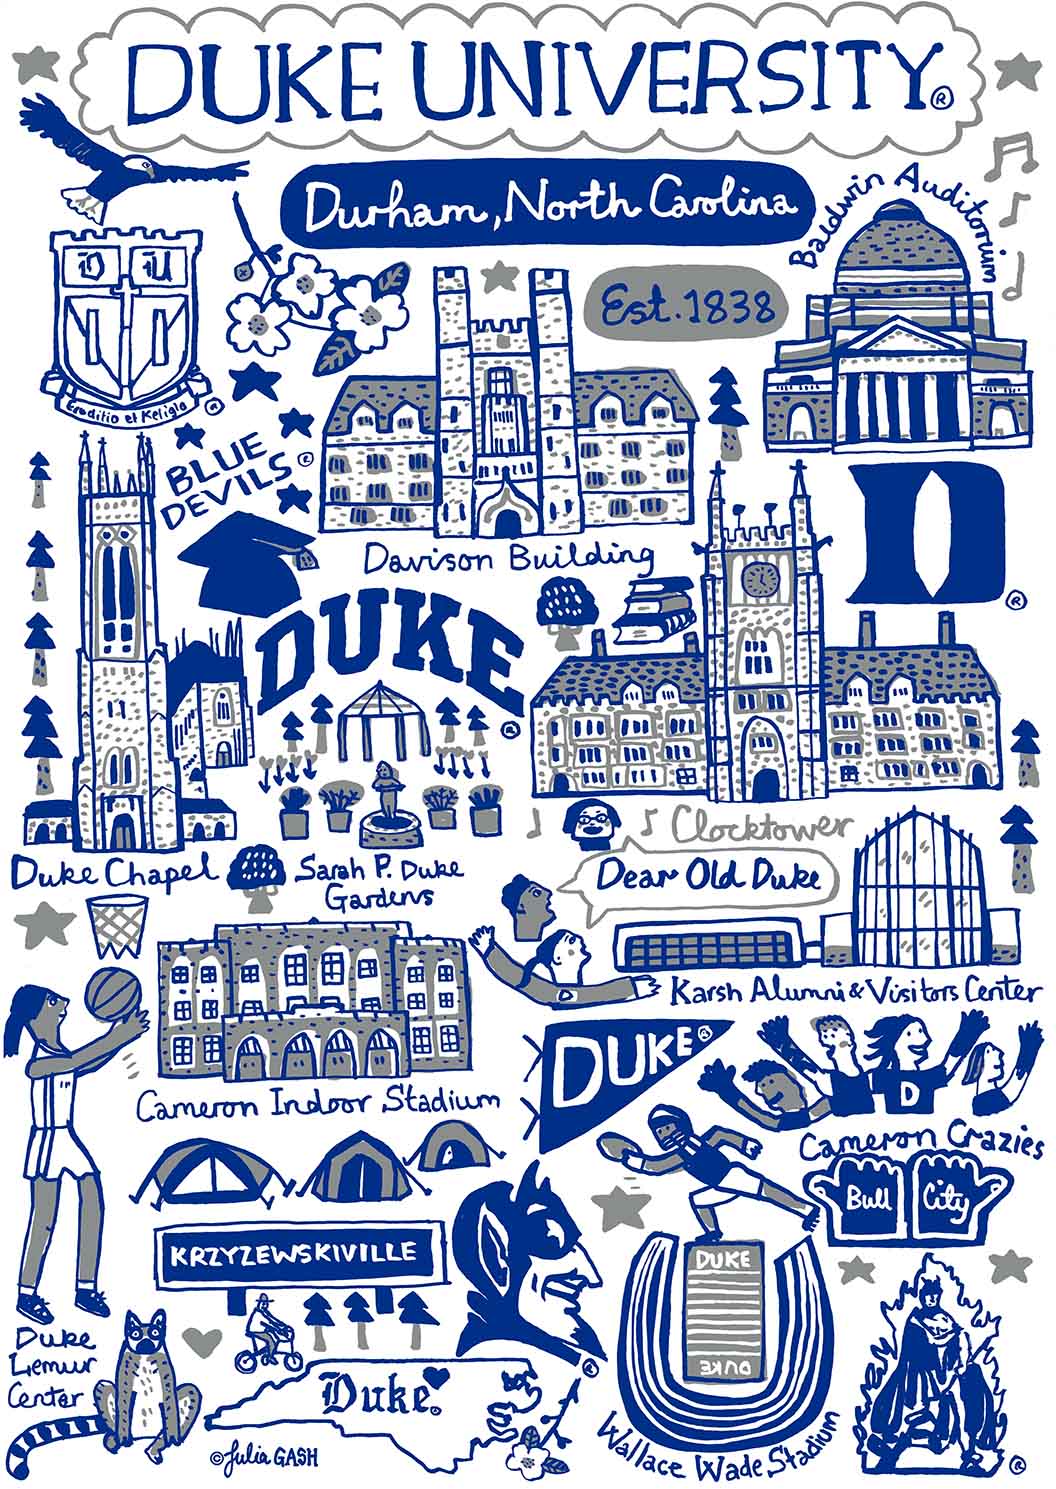 Duke University Design by Julia Gash